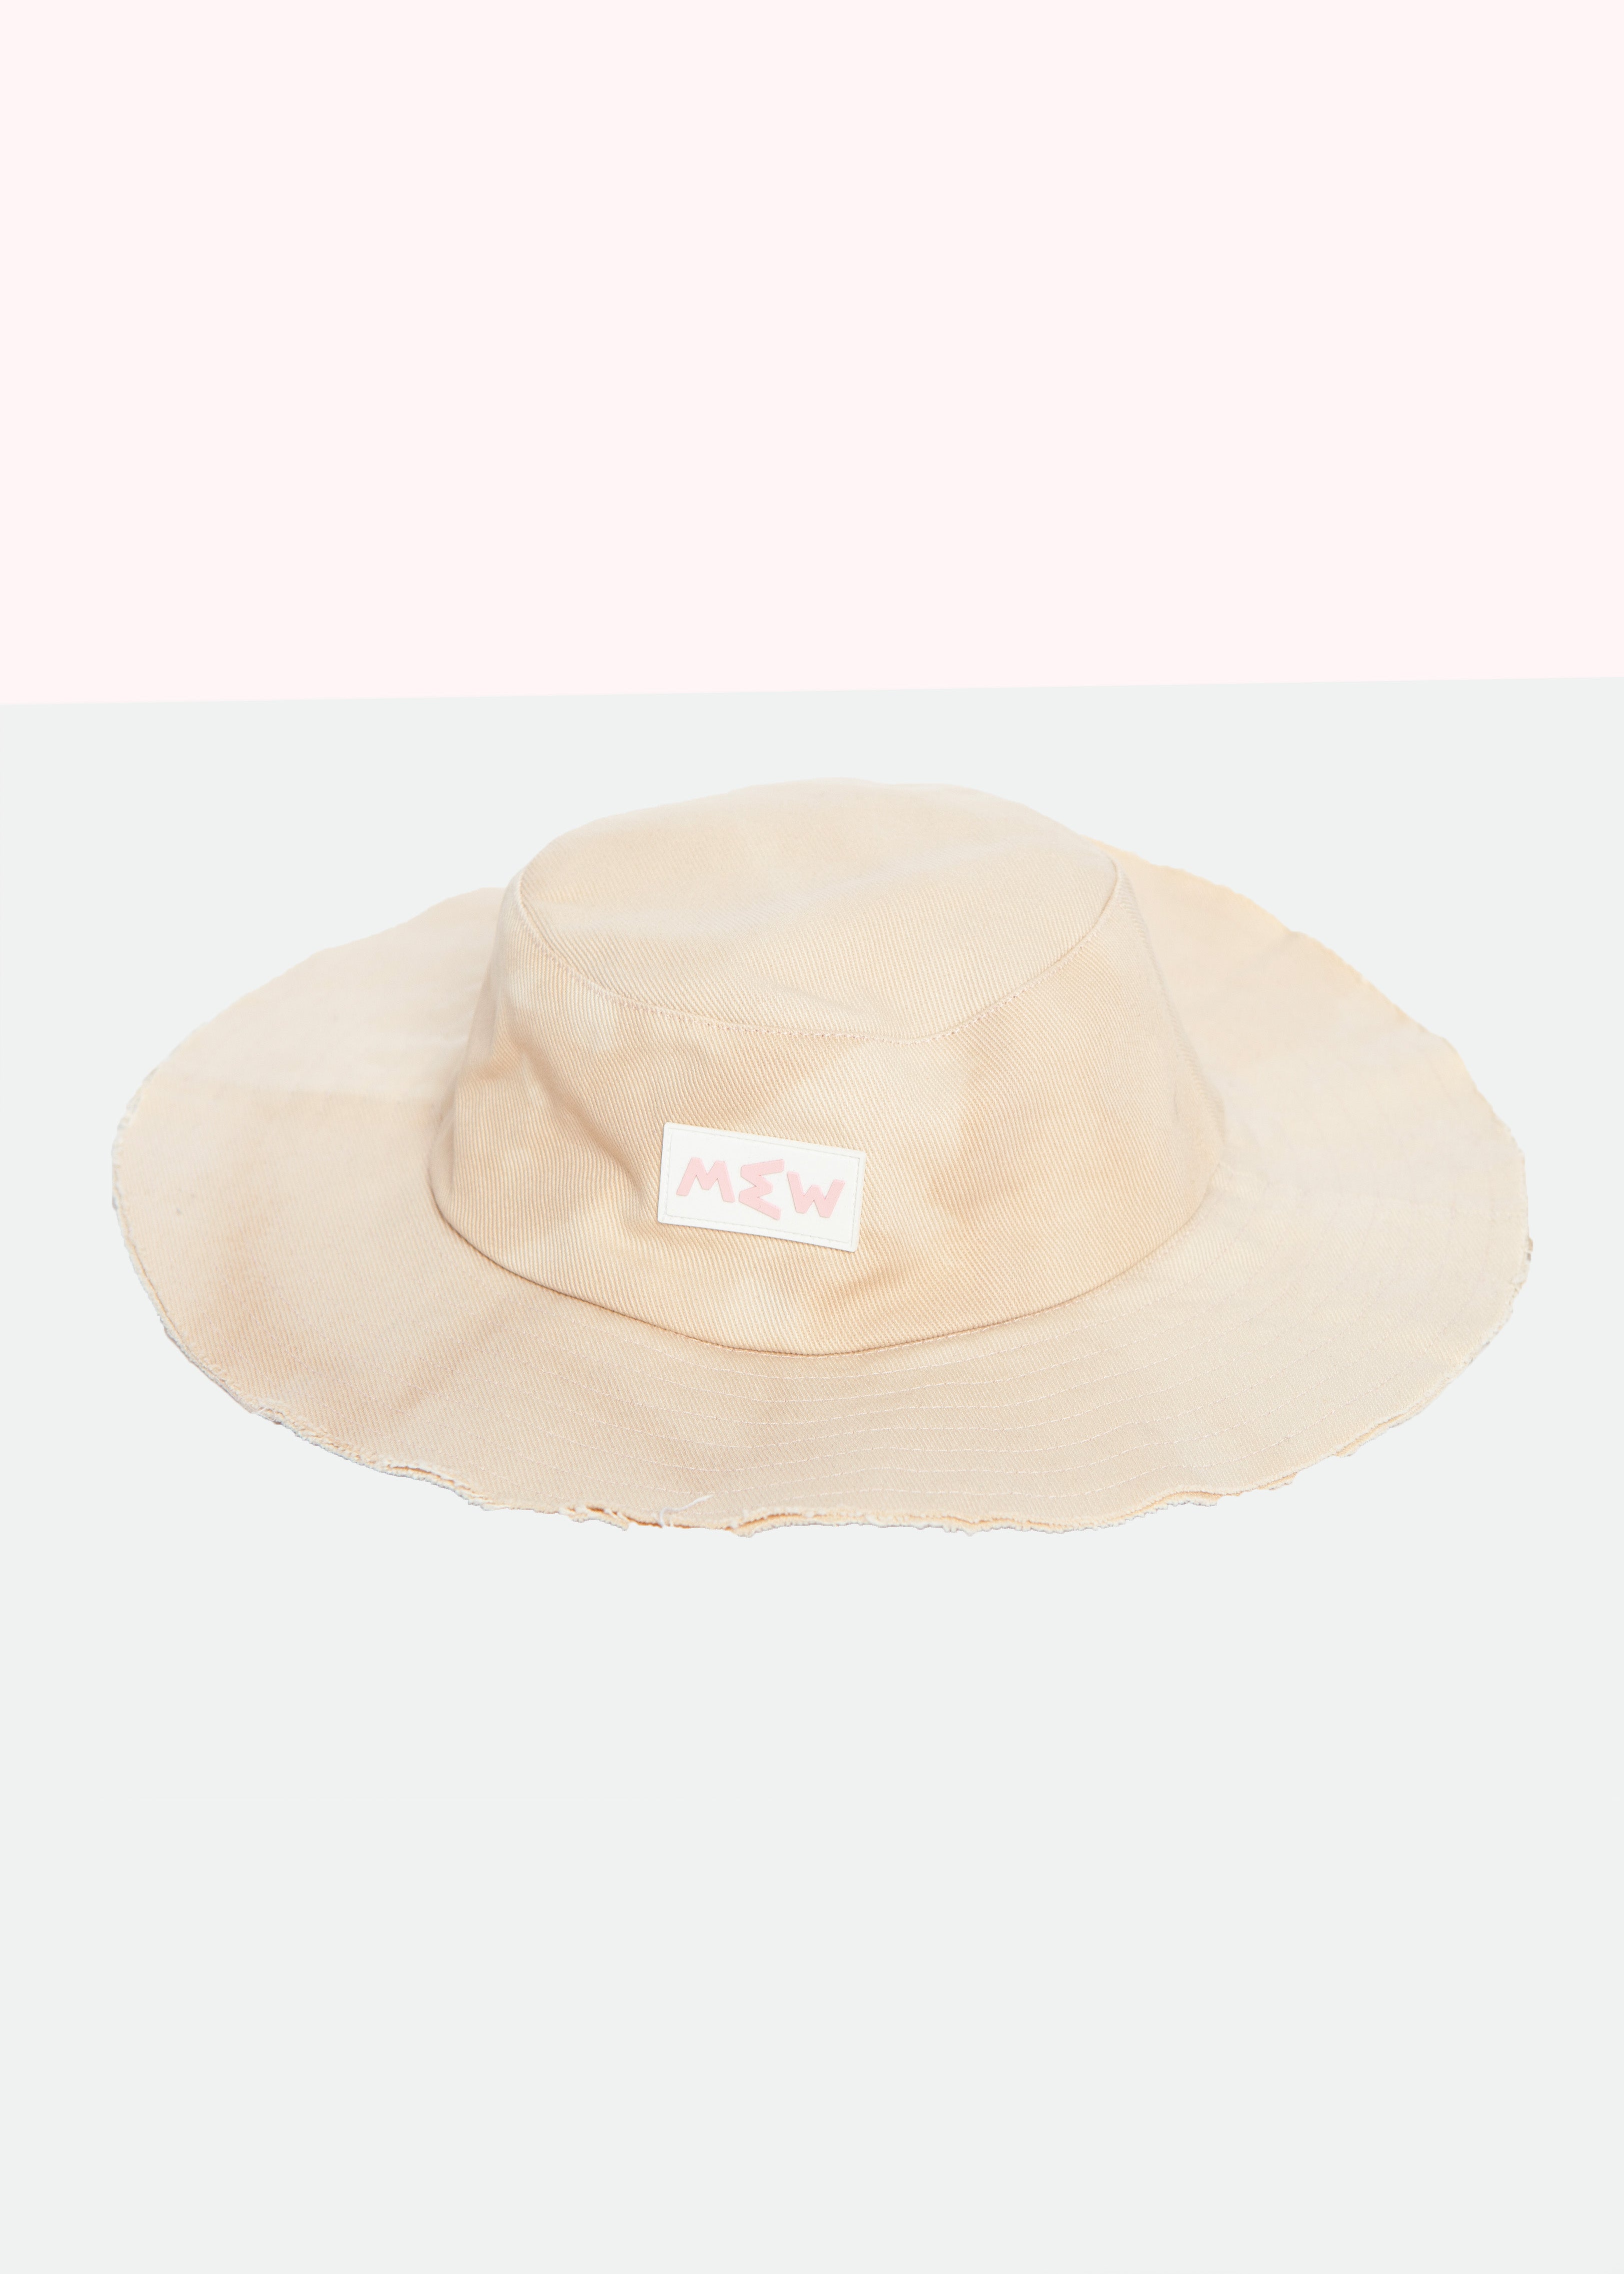 Tea MEW beach bucket hat